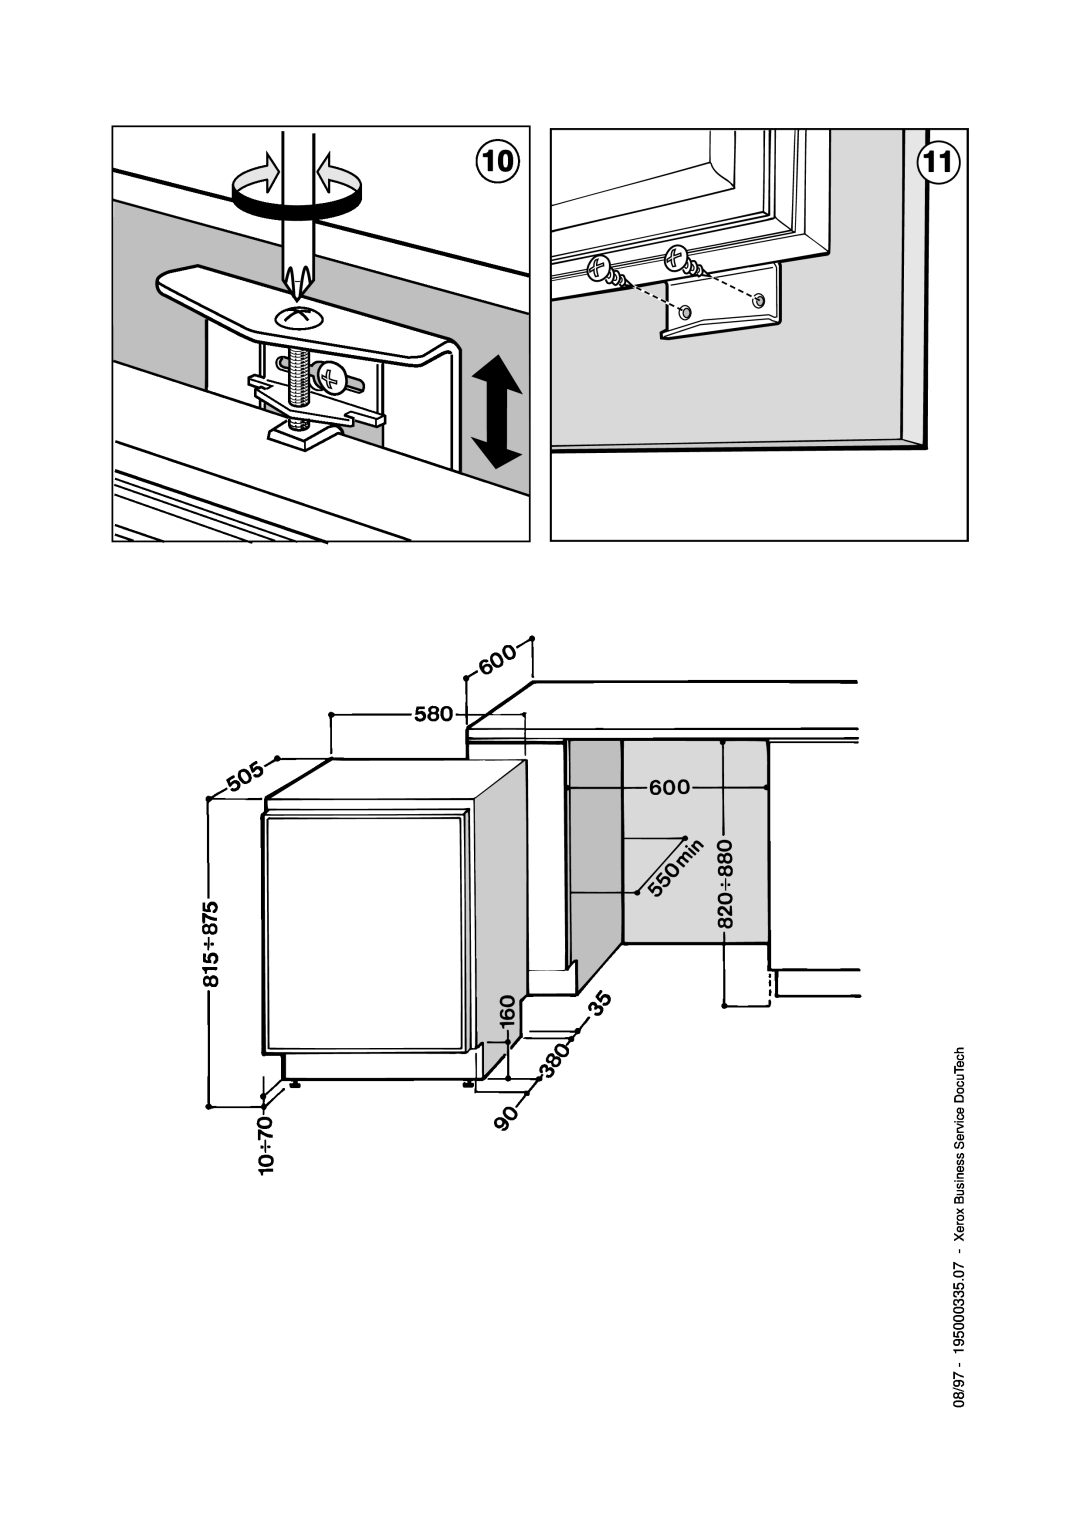 Smeg VR120B manual 08/97 - 195000335.07 - Xerox Business Service DocuTech 